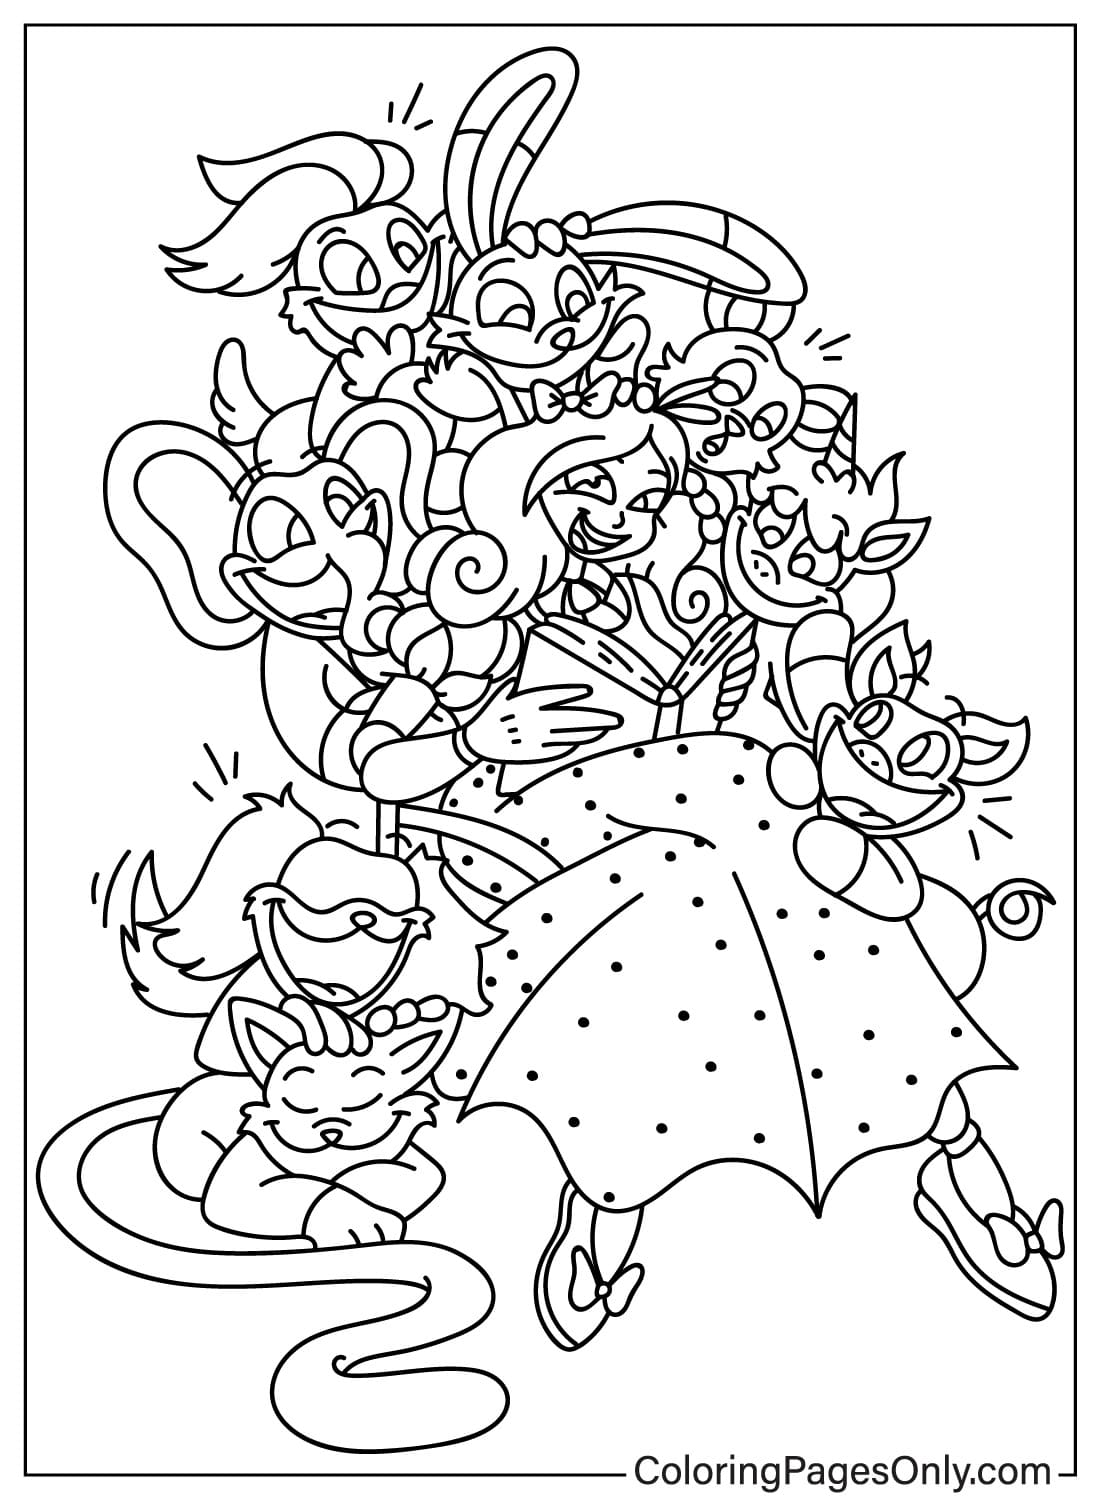 Página para colorir de Miss Delight e Smiling Critters de Smiling Critters